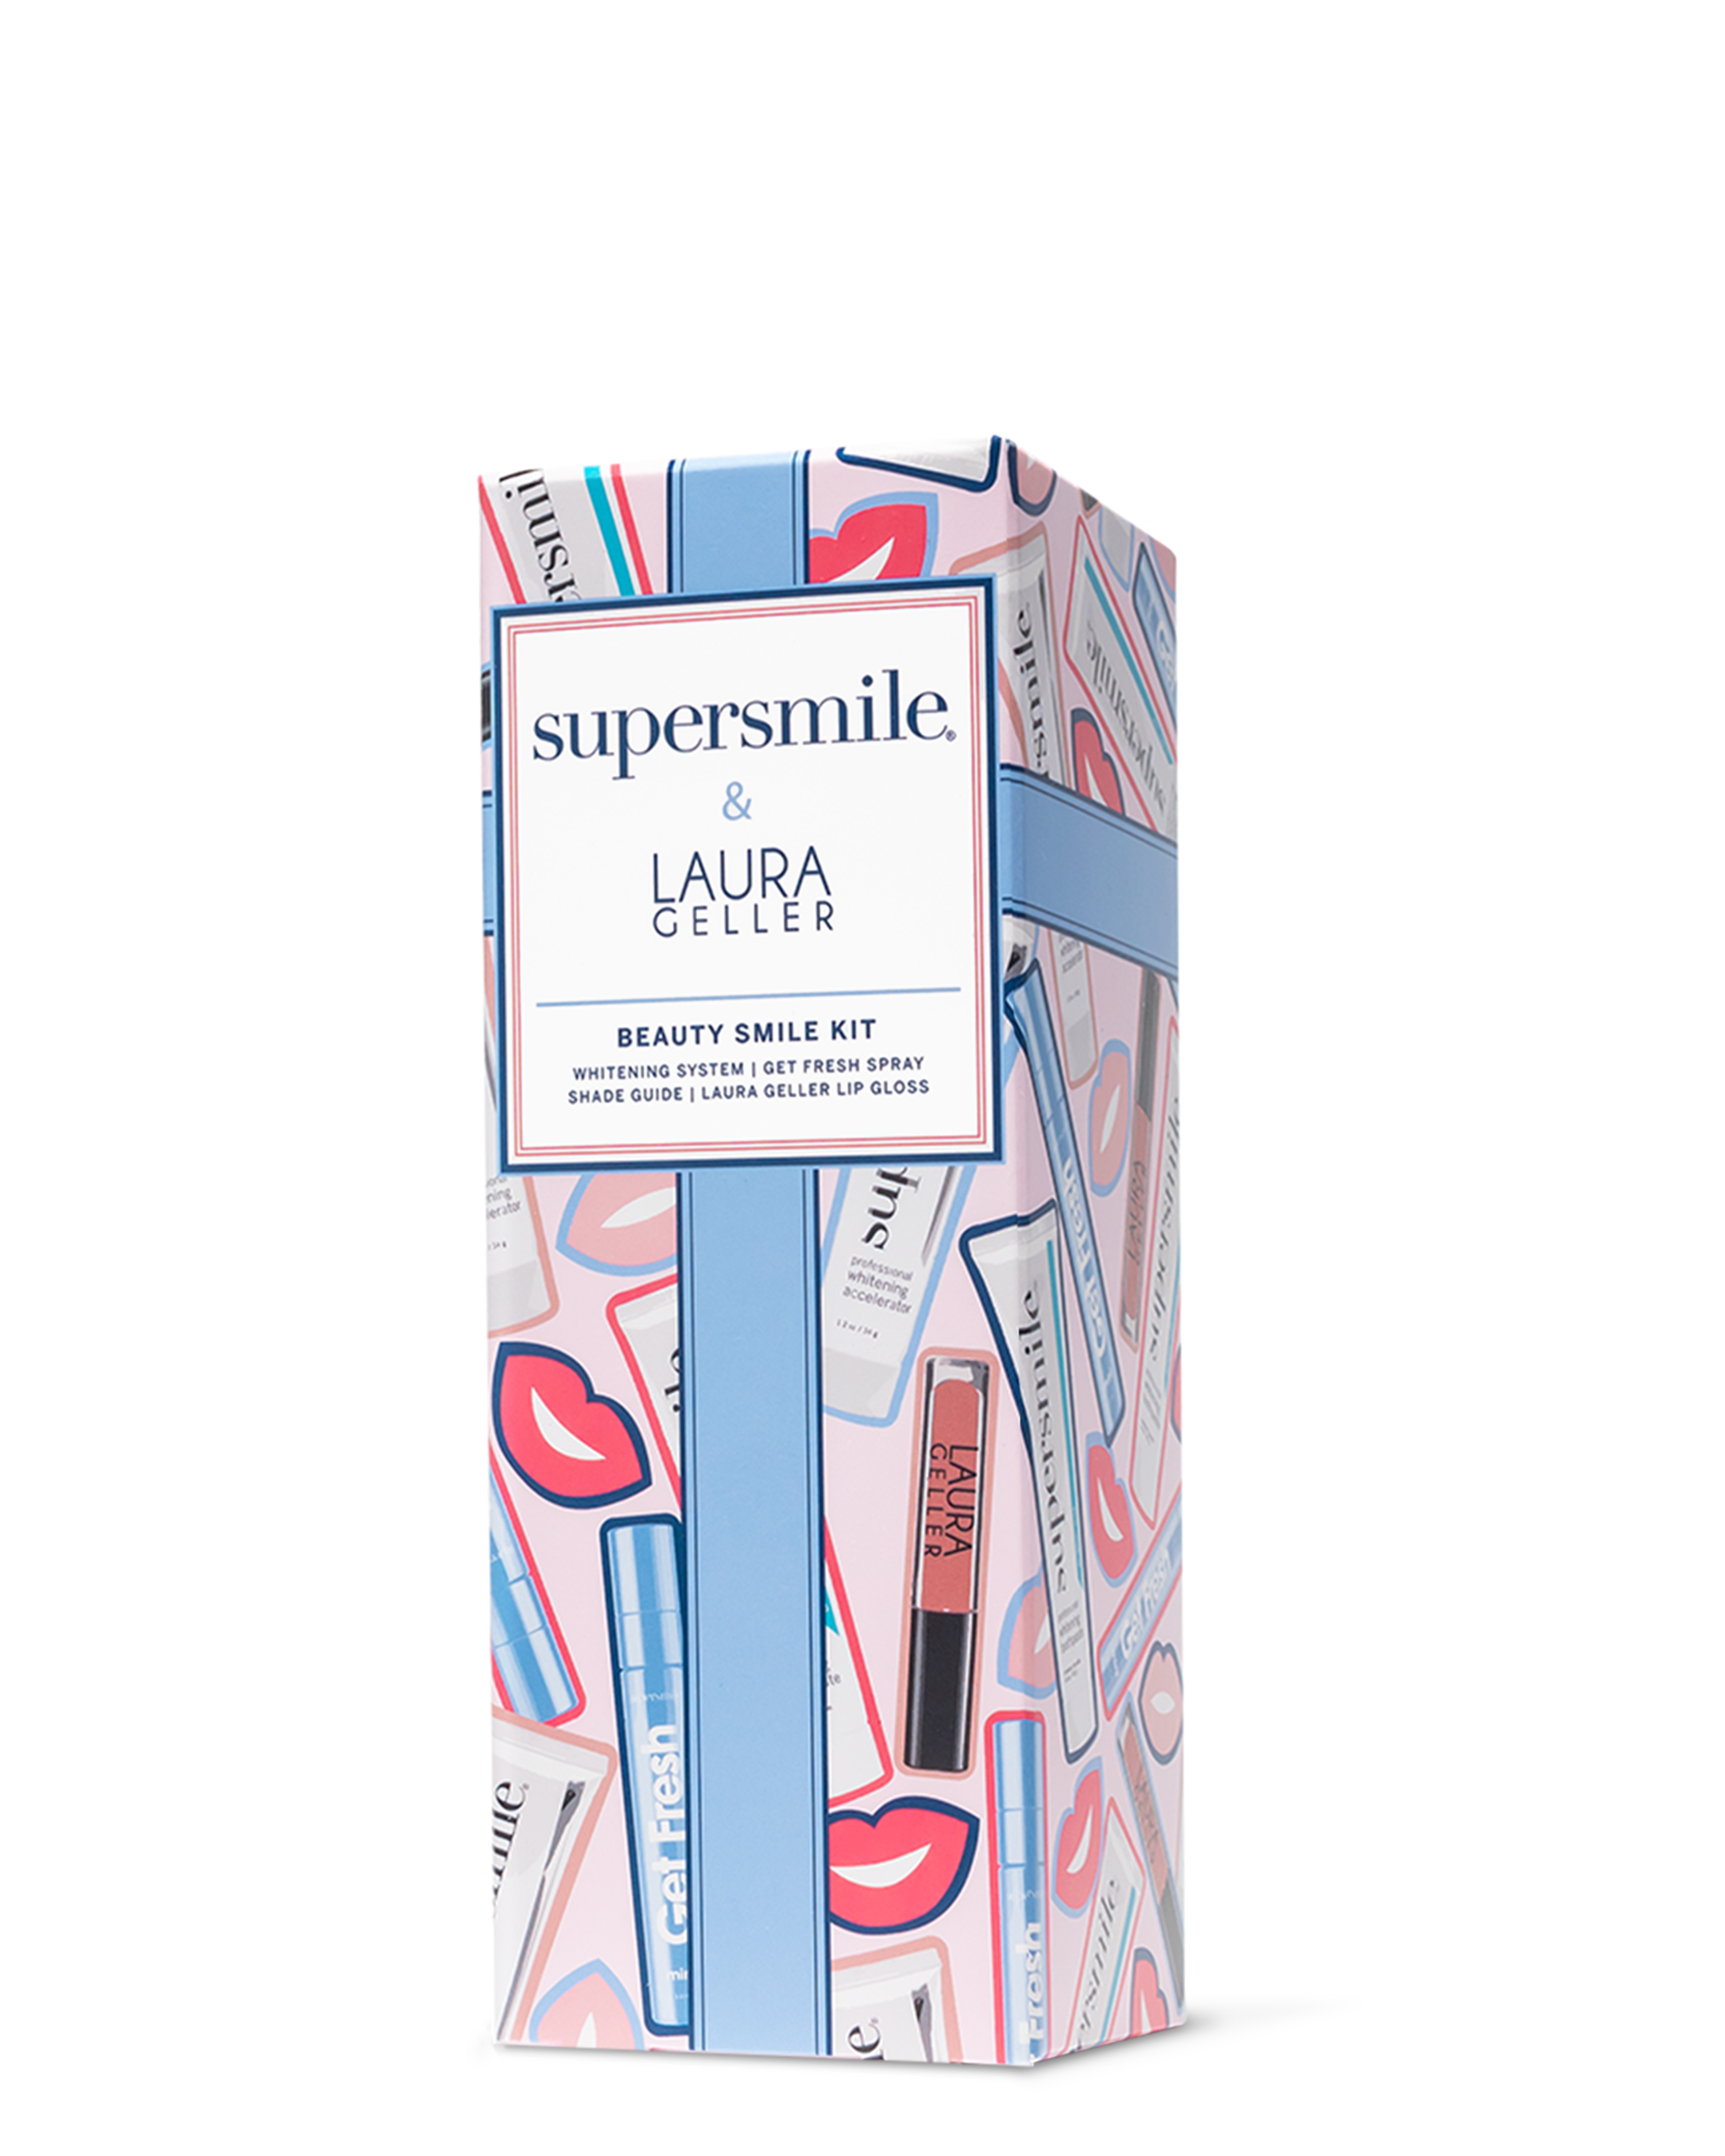 Supersmile X Laura Geller Gift Set Box